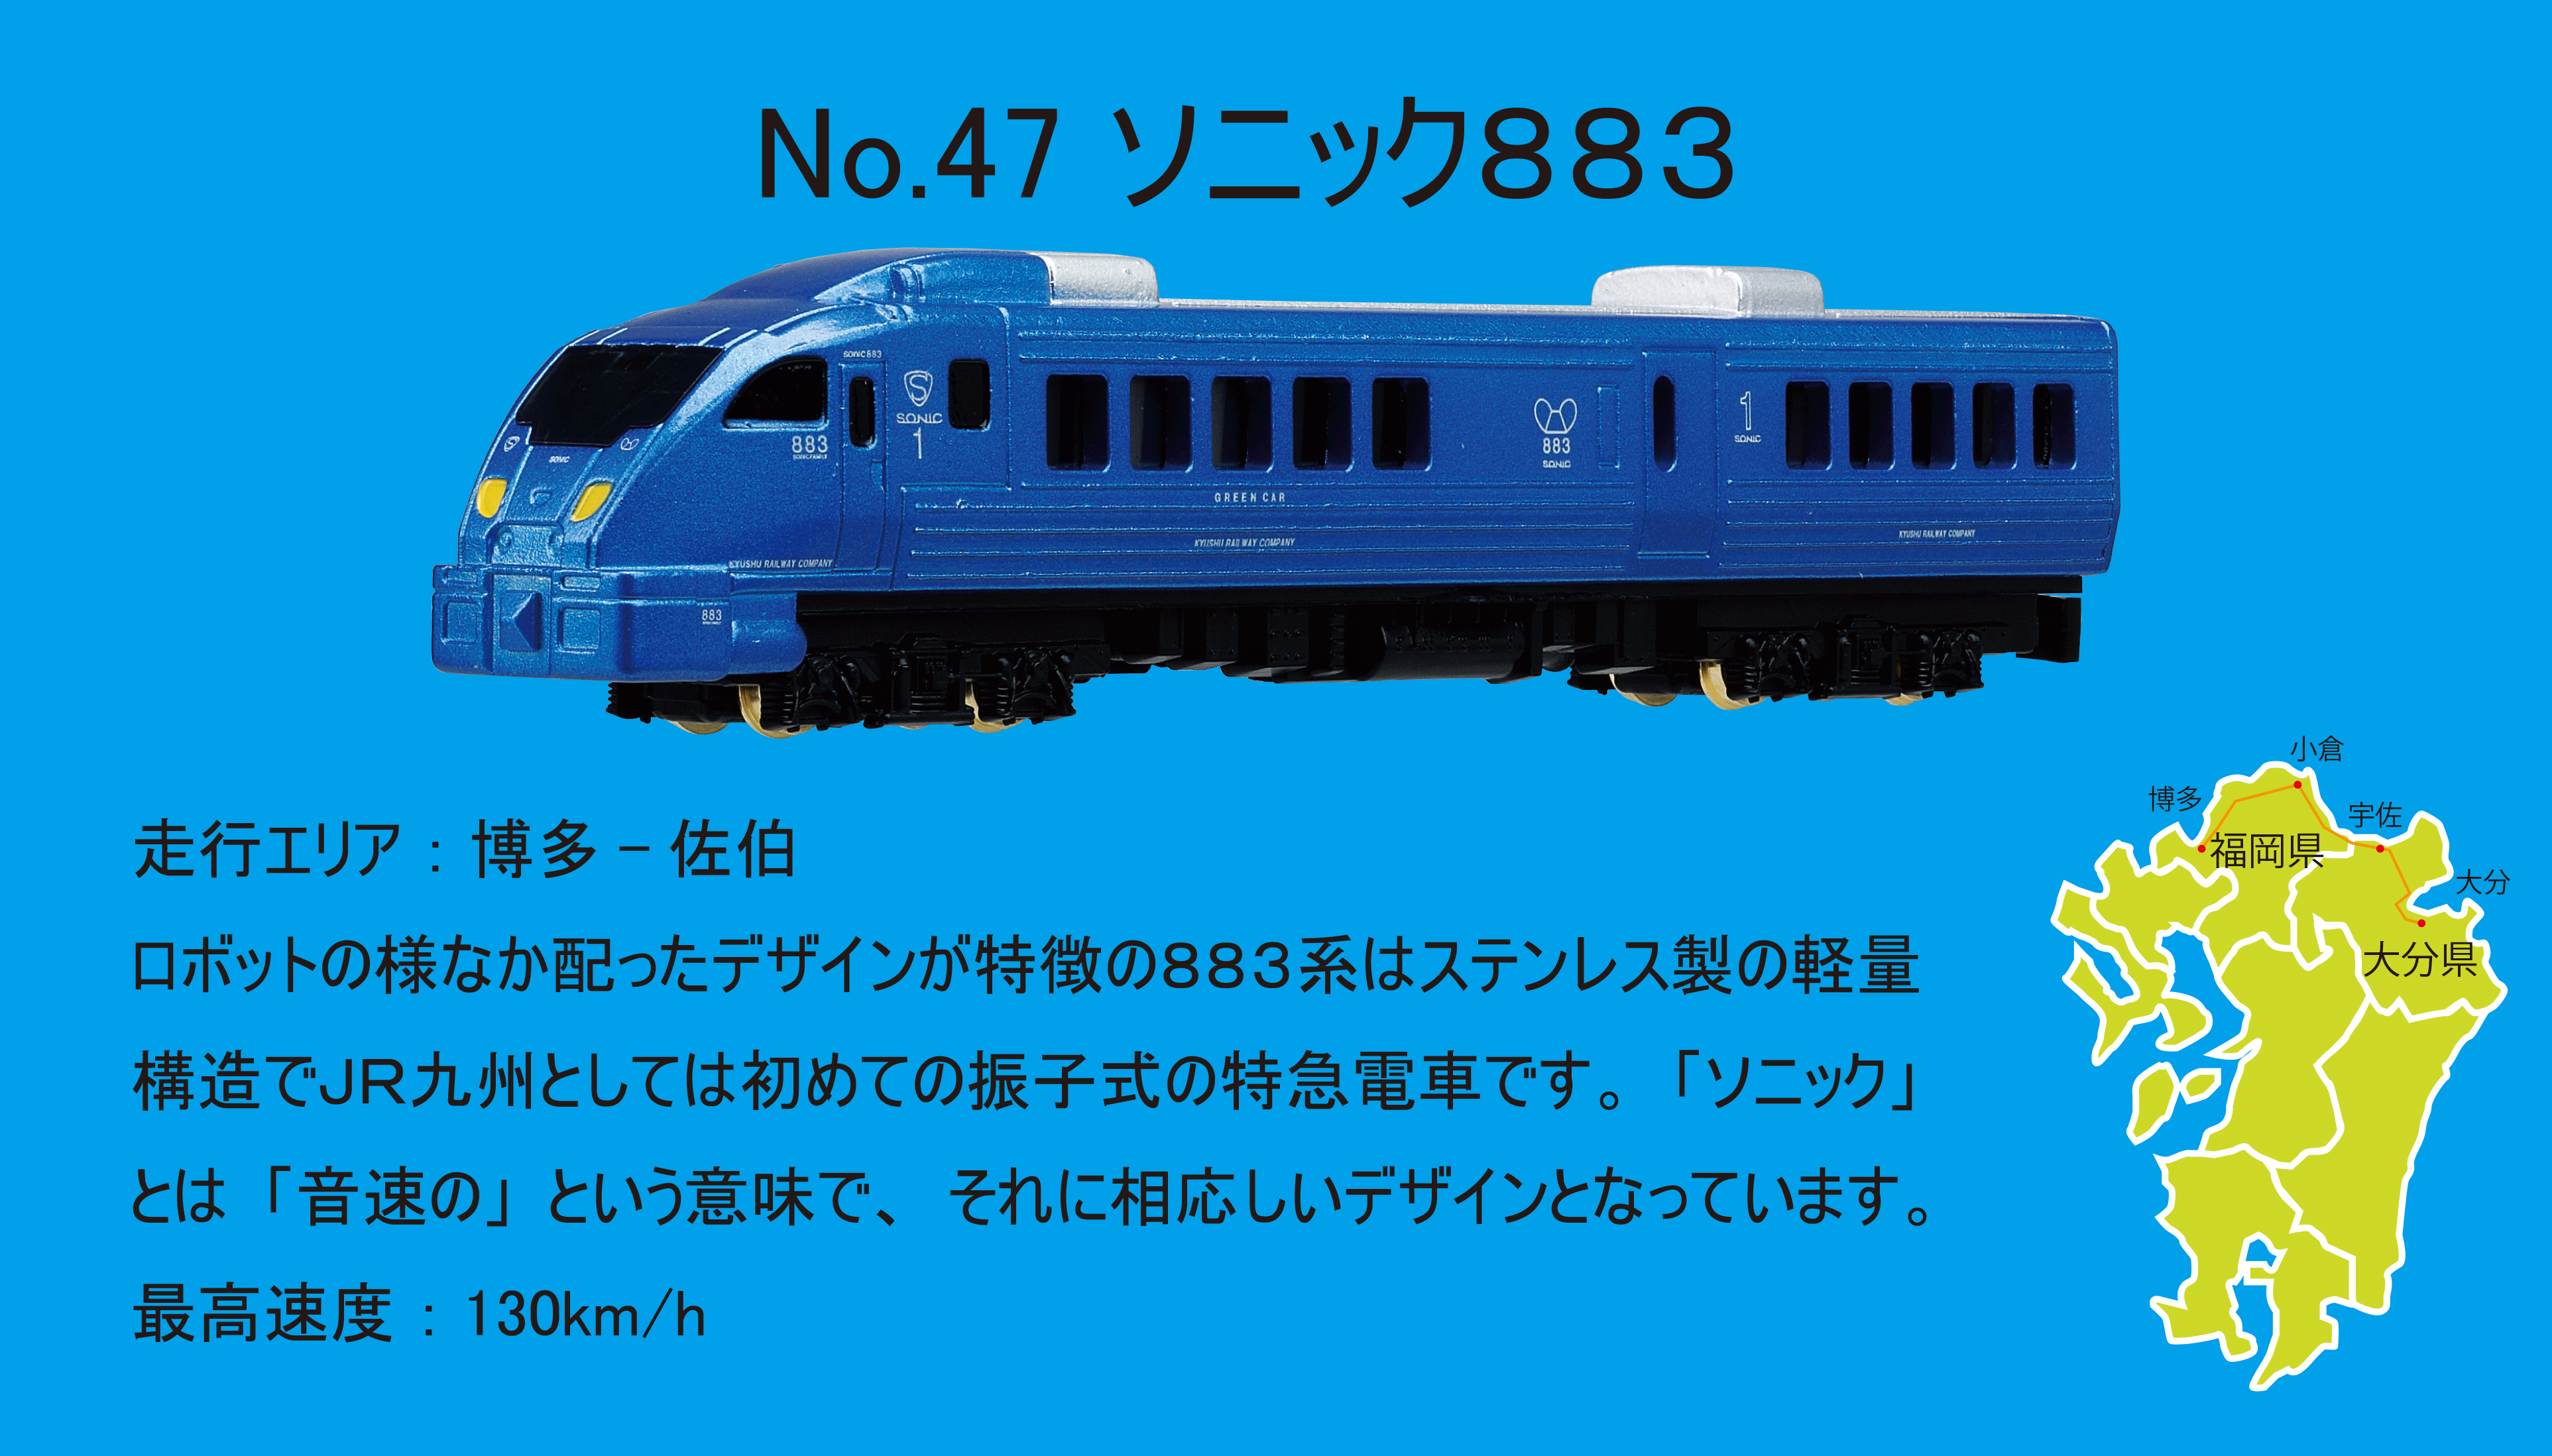 Nゲージダイキャストスケールモデル No.41 ~ No.50